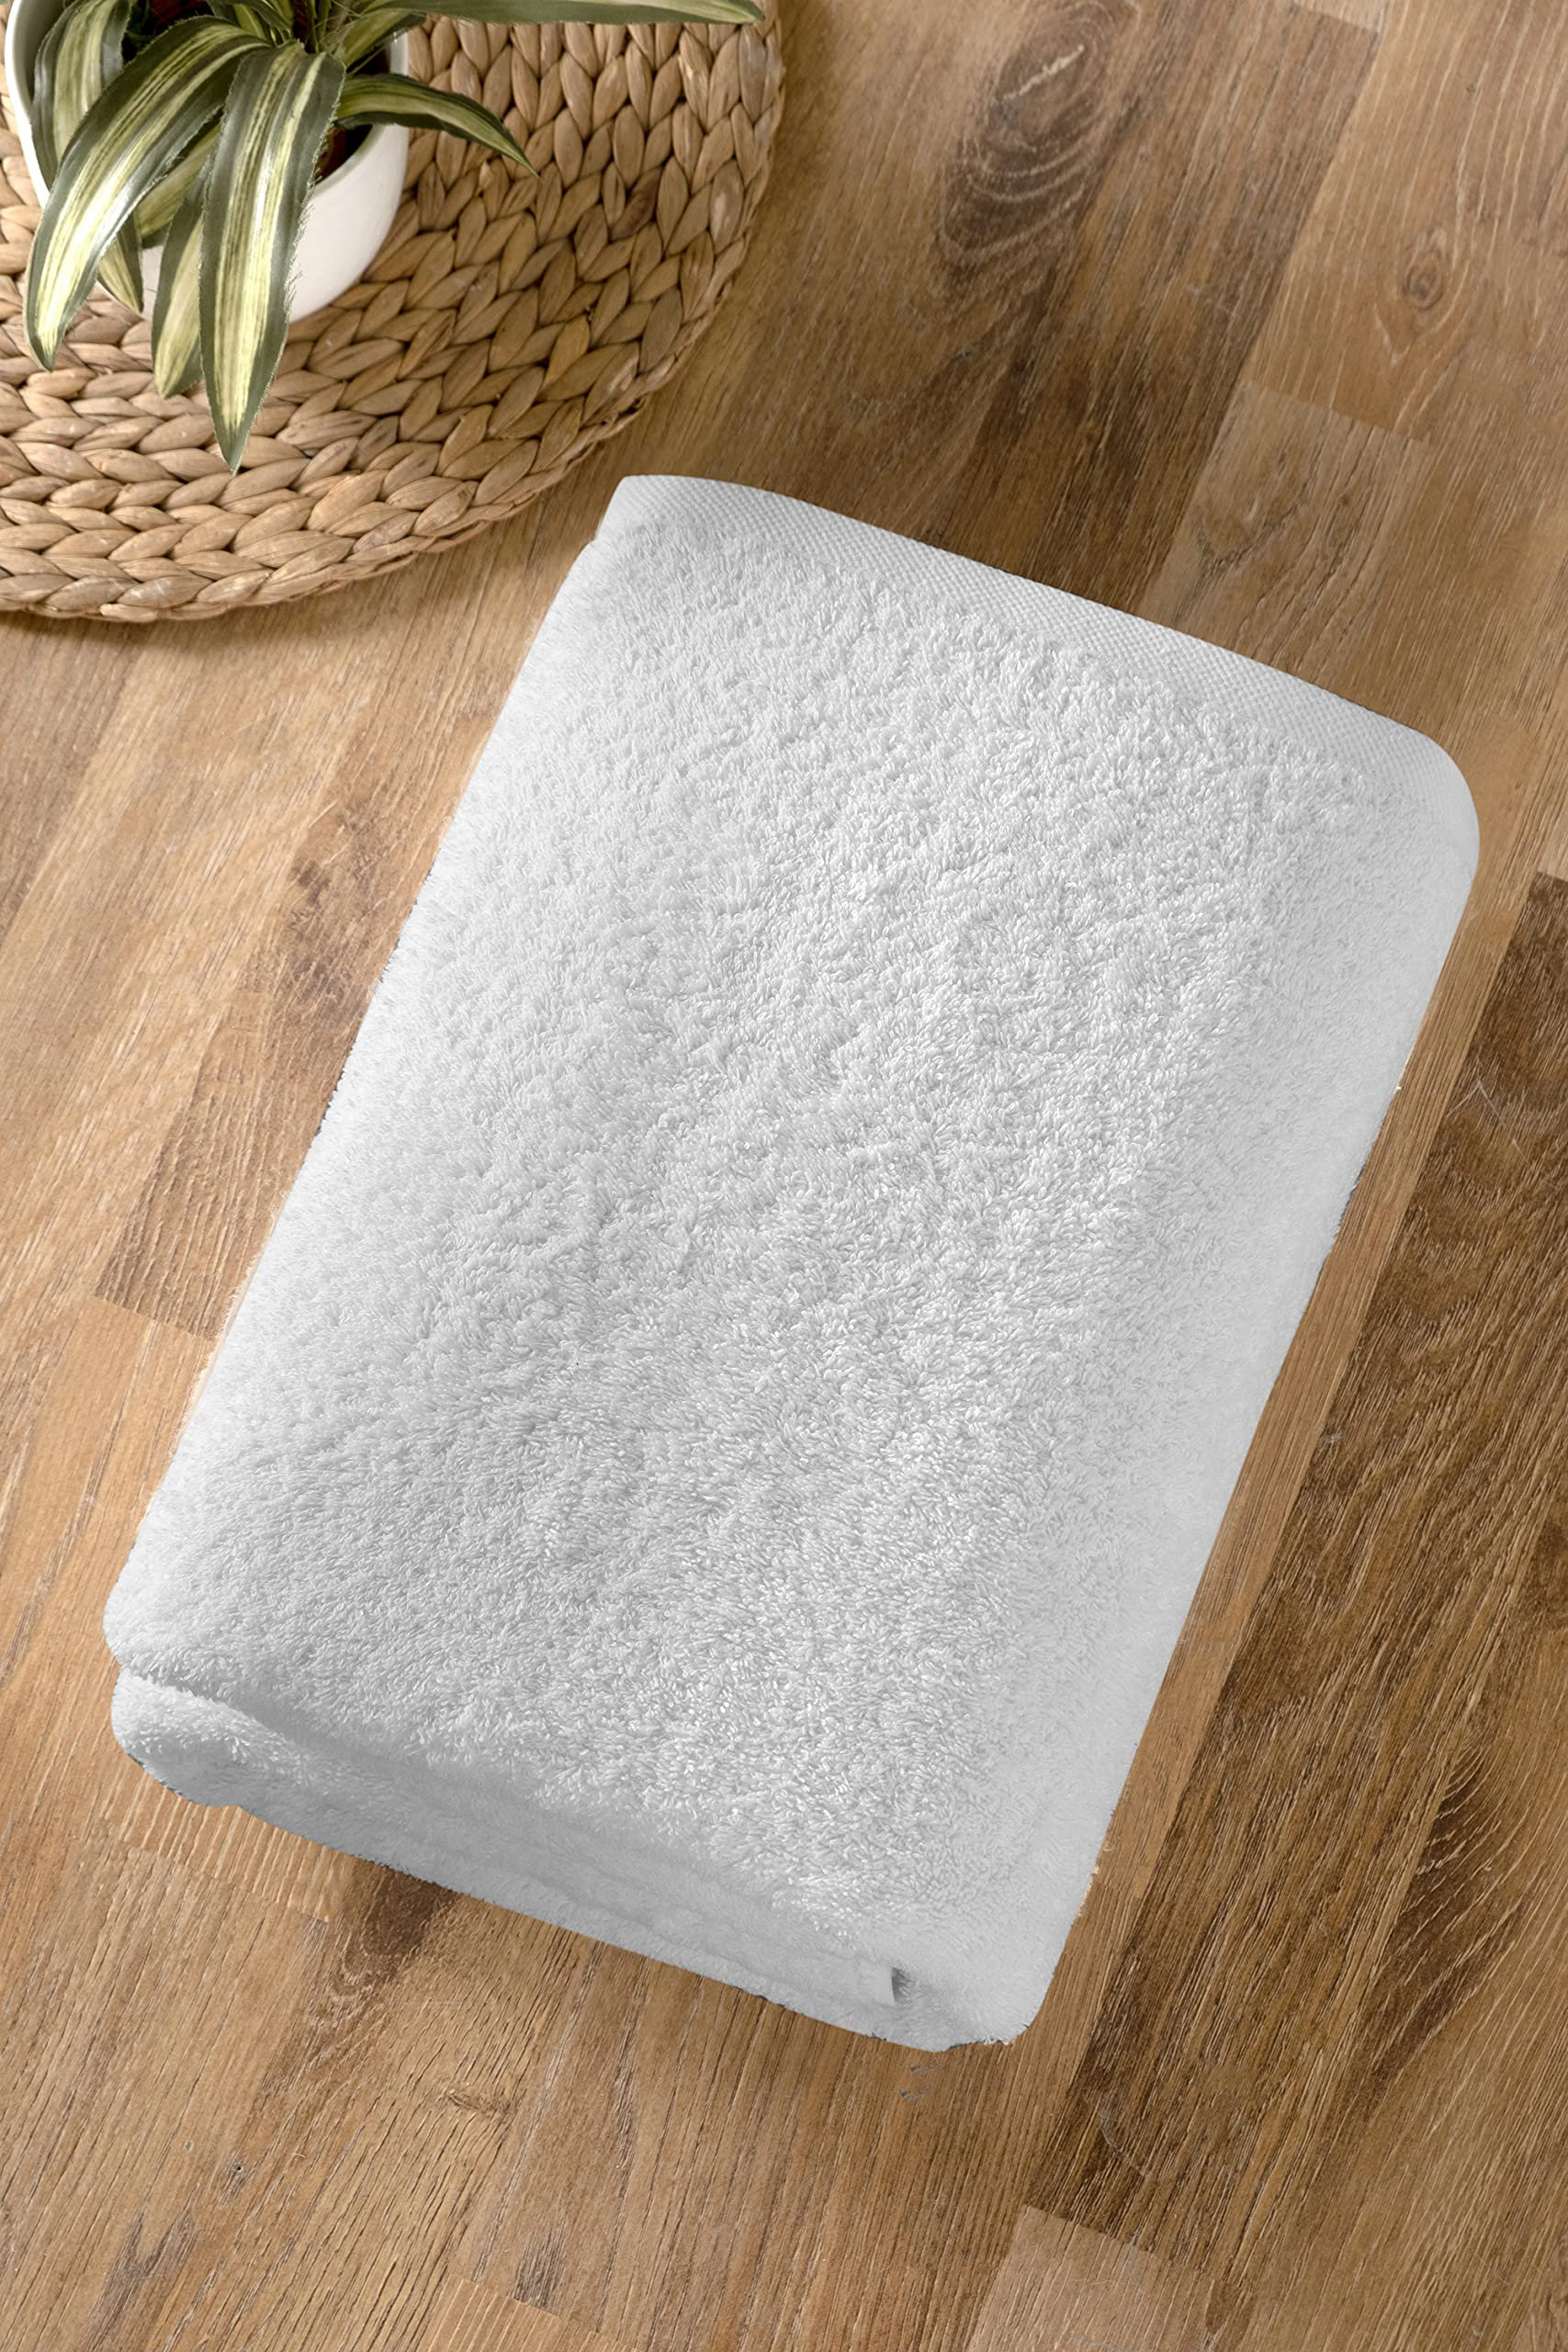 Nine West Luxury 40 x 80 Jumbo Bath Sheet 100% Turkish Cotton Bath Sheet  Towel